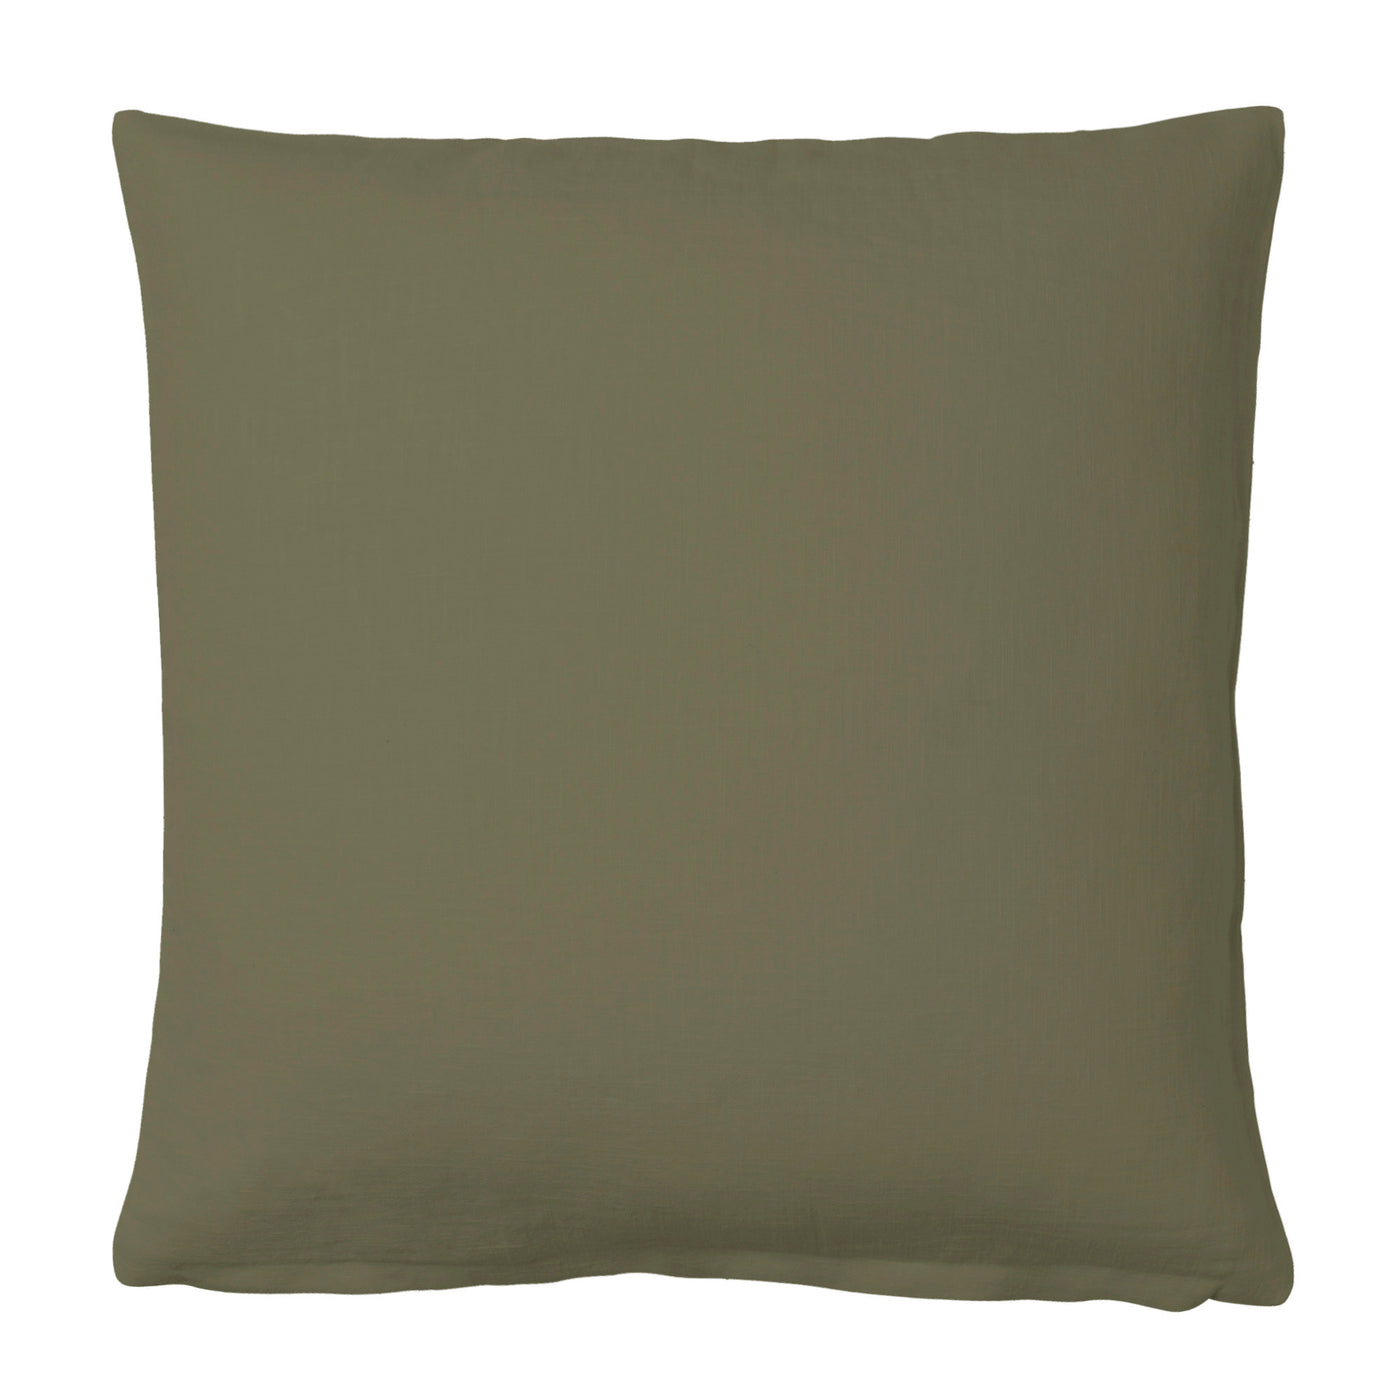 Basic Khaki Pillow